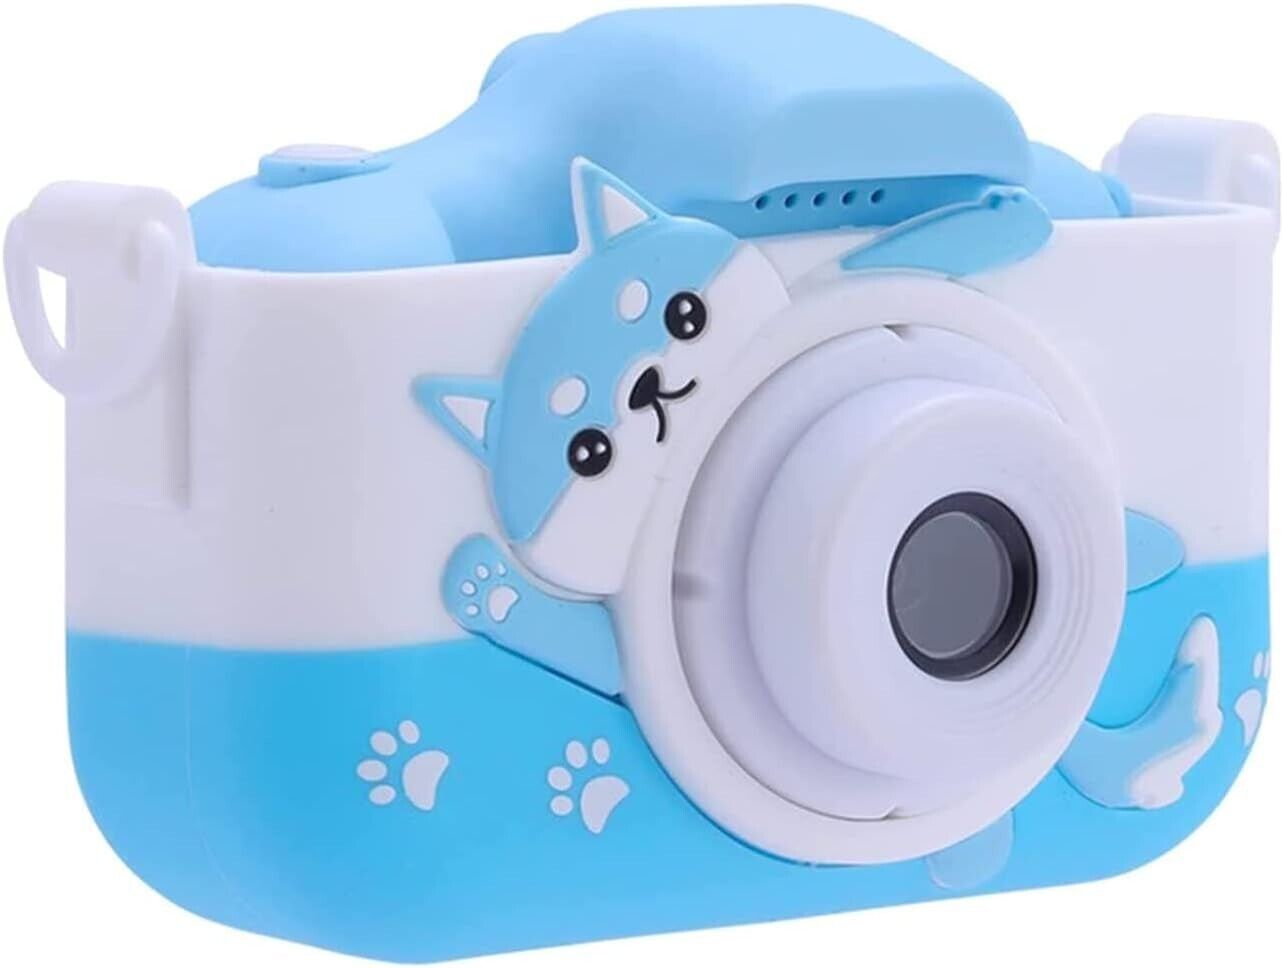 Forever Digitale Kamera für Kinder Robuste Kinderkamera 2 Zoll Blau 1080P HD